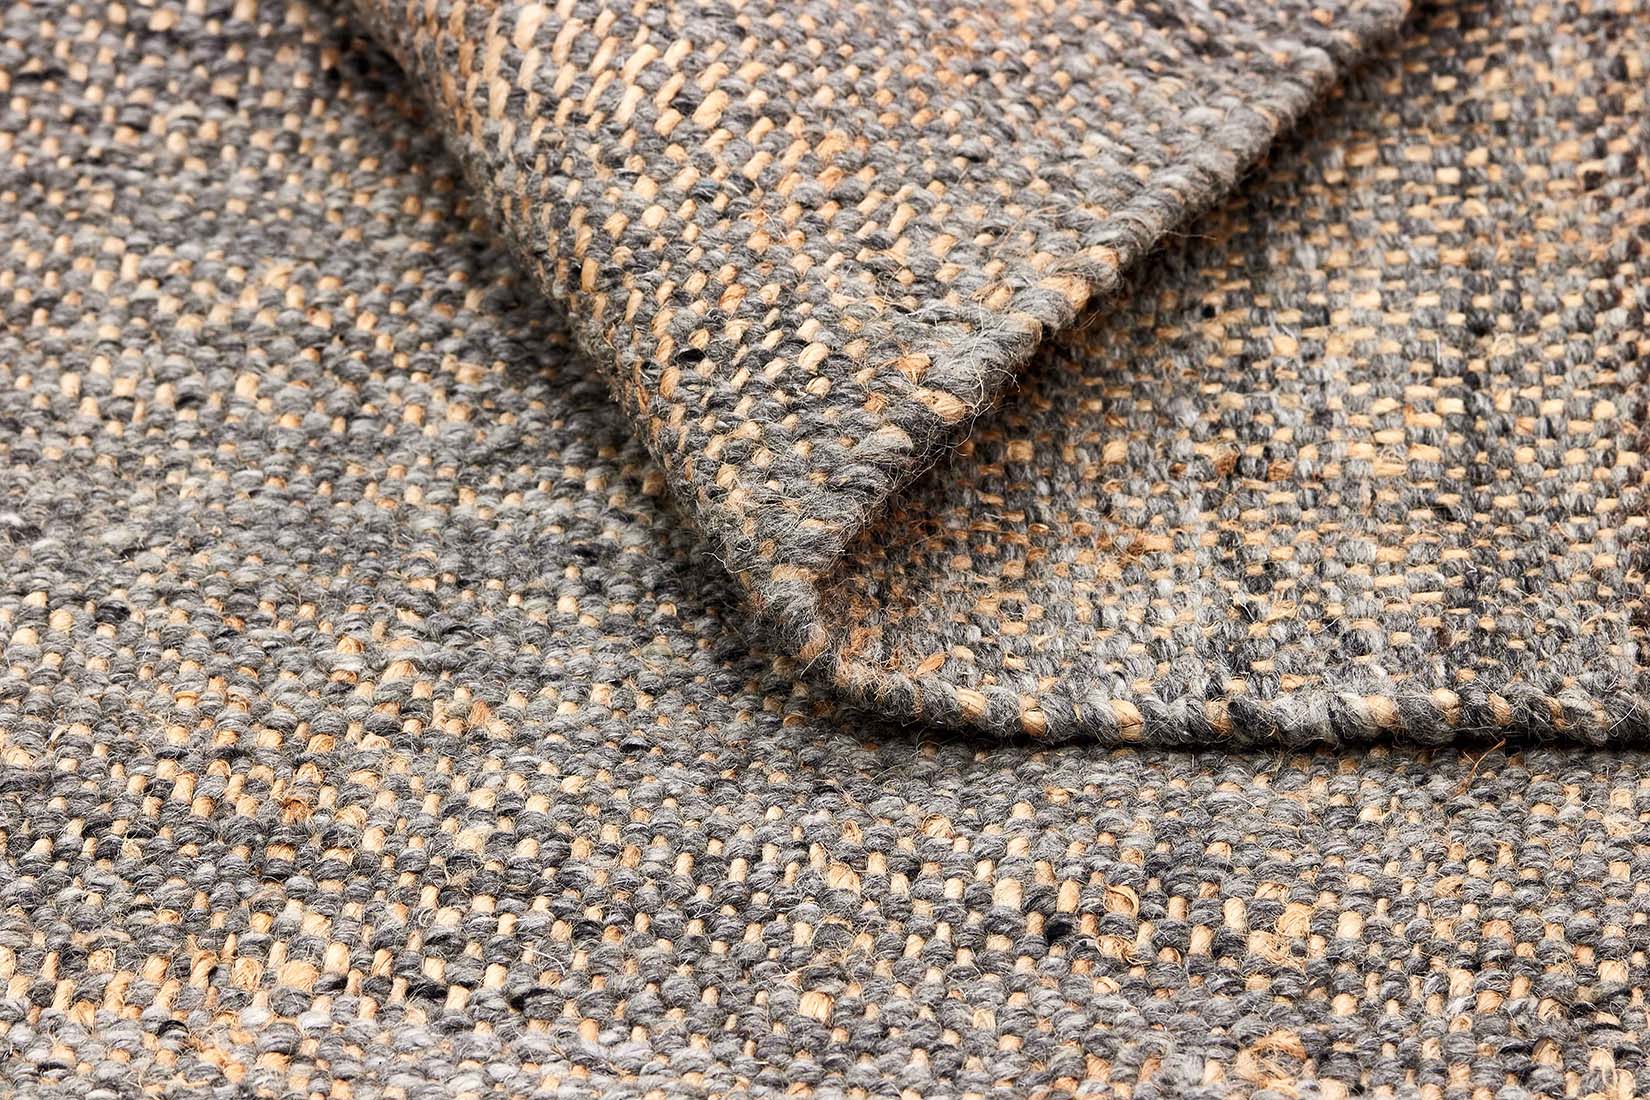 Dark grey textured flatweave rug
